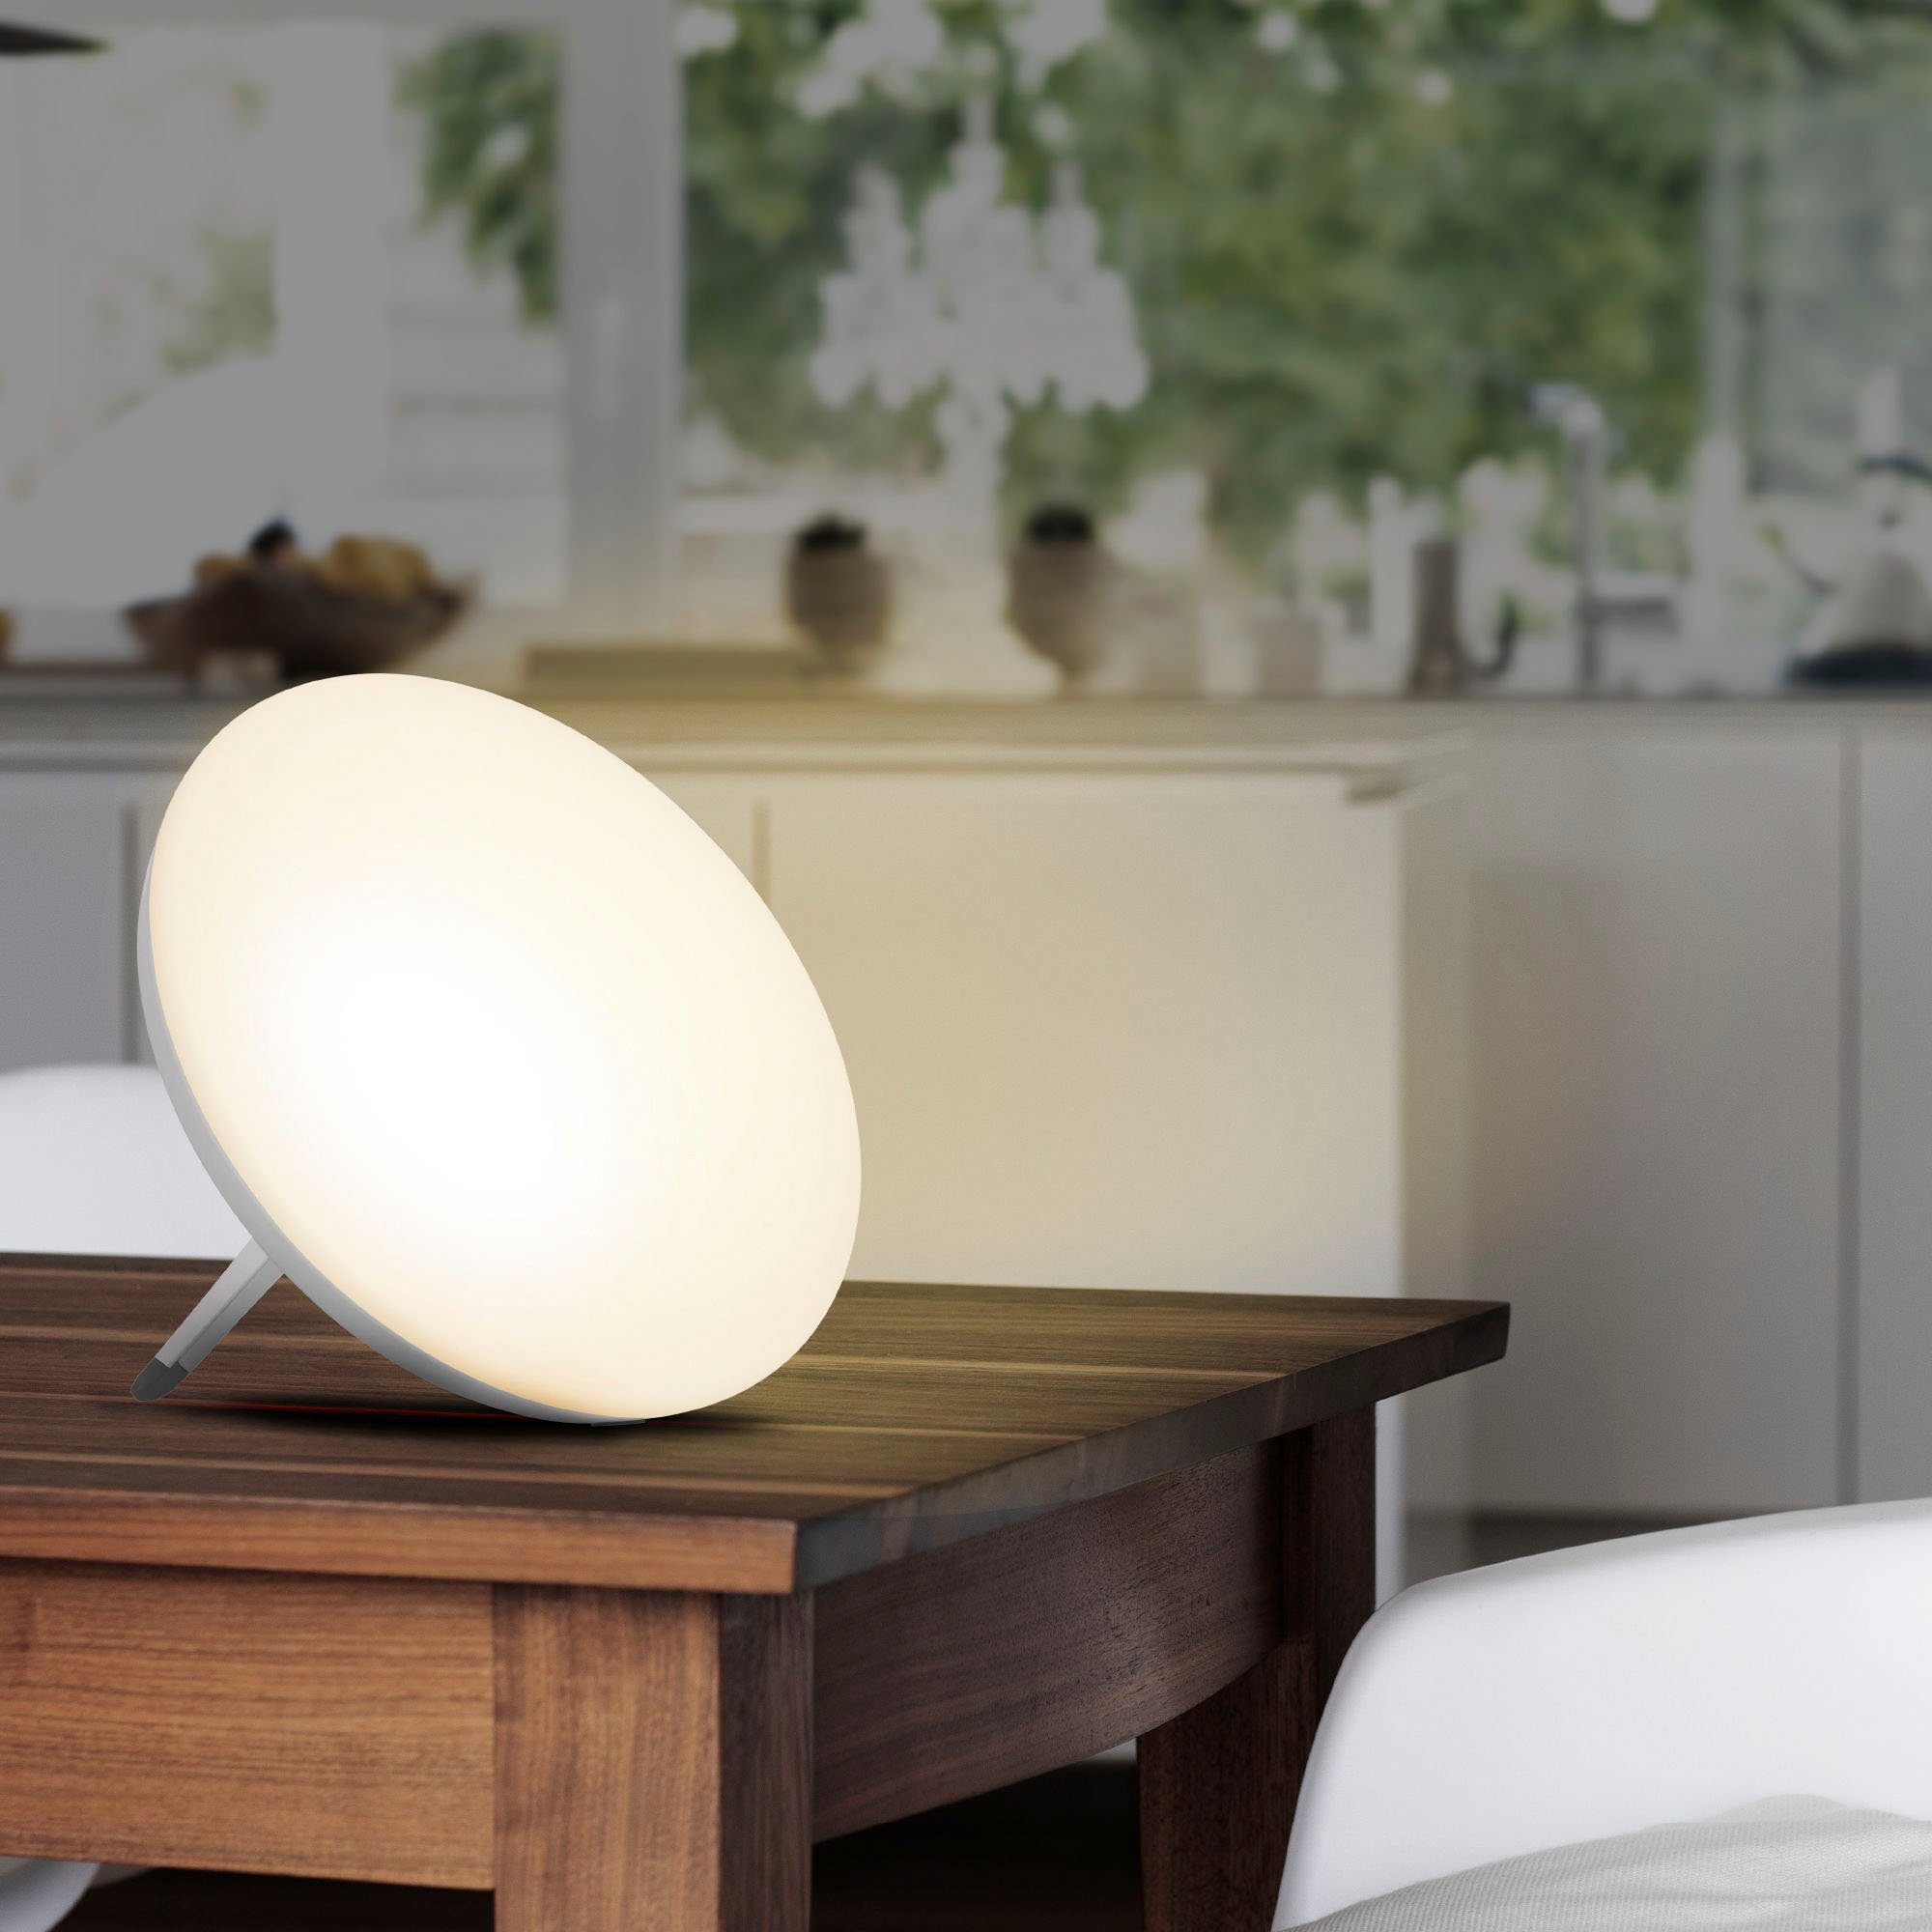 Medisana Tageslichtlampe LT500, Farbwechsel, Warmweiß integriert, fest LED